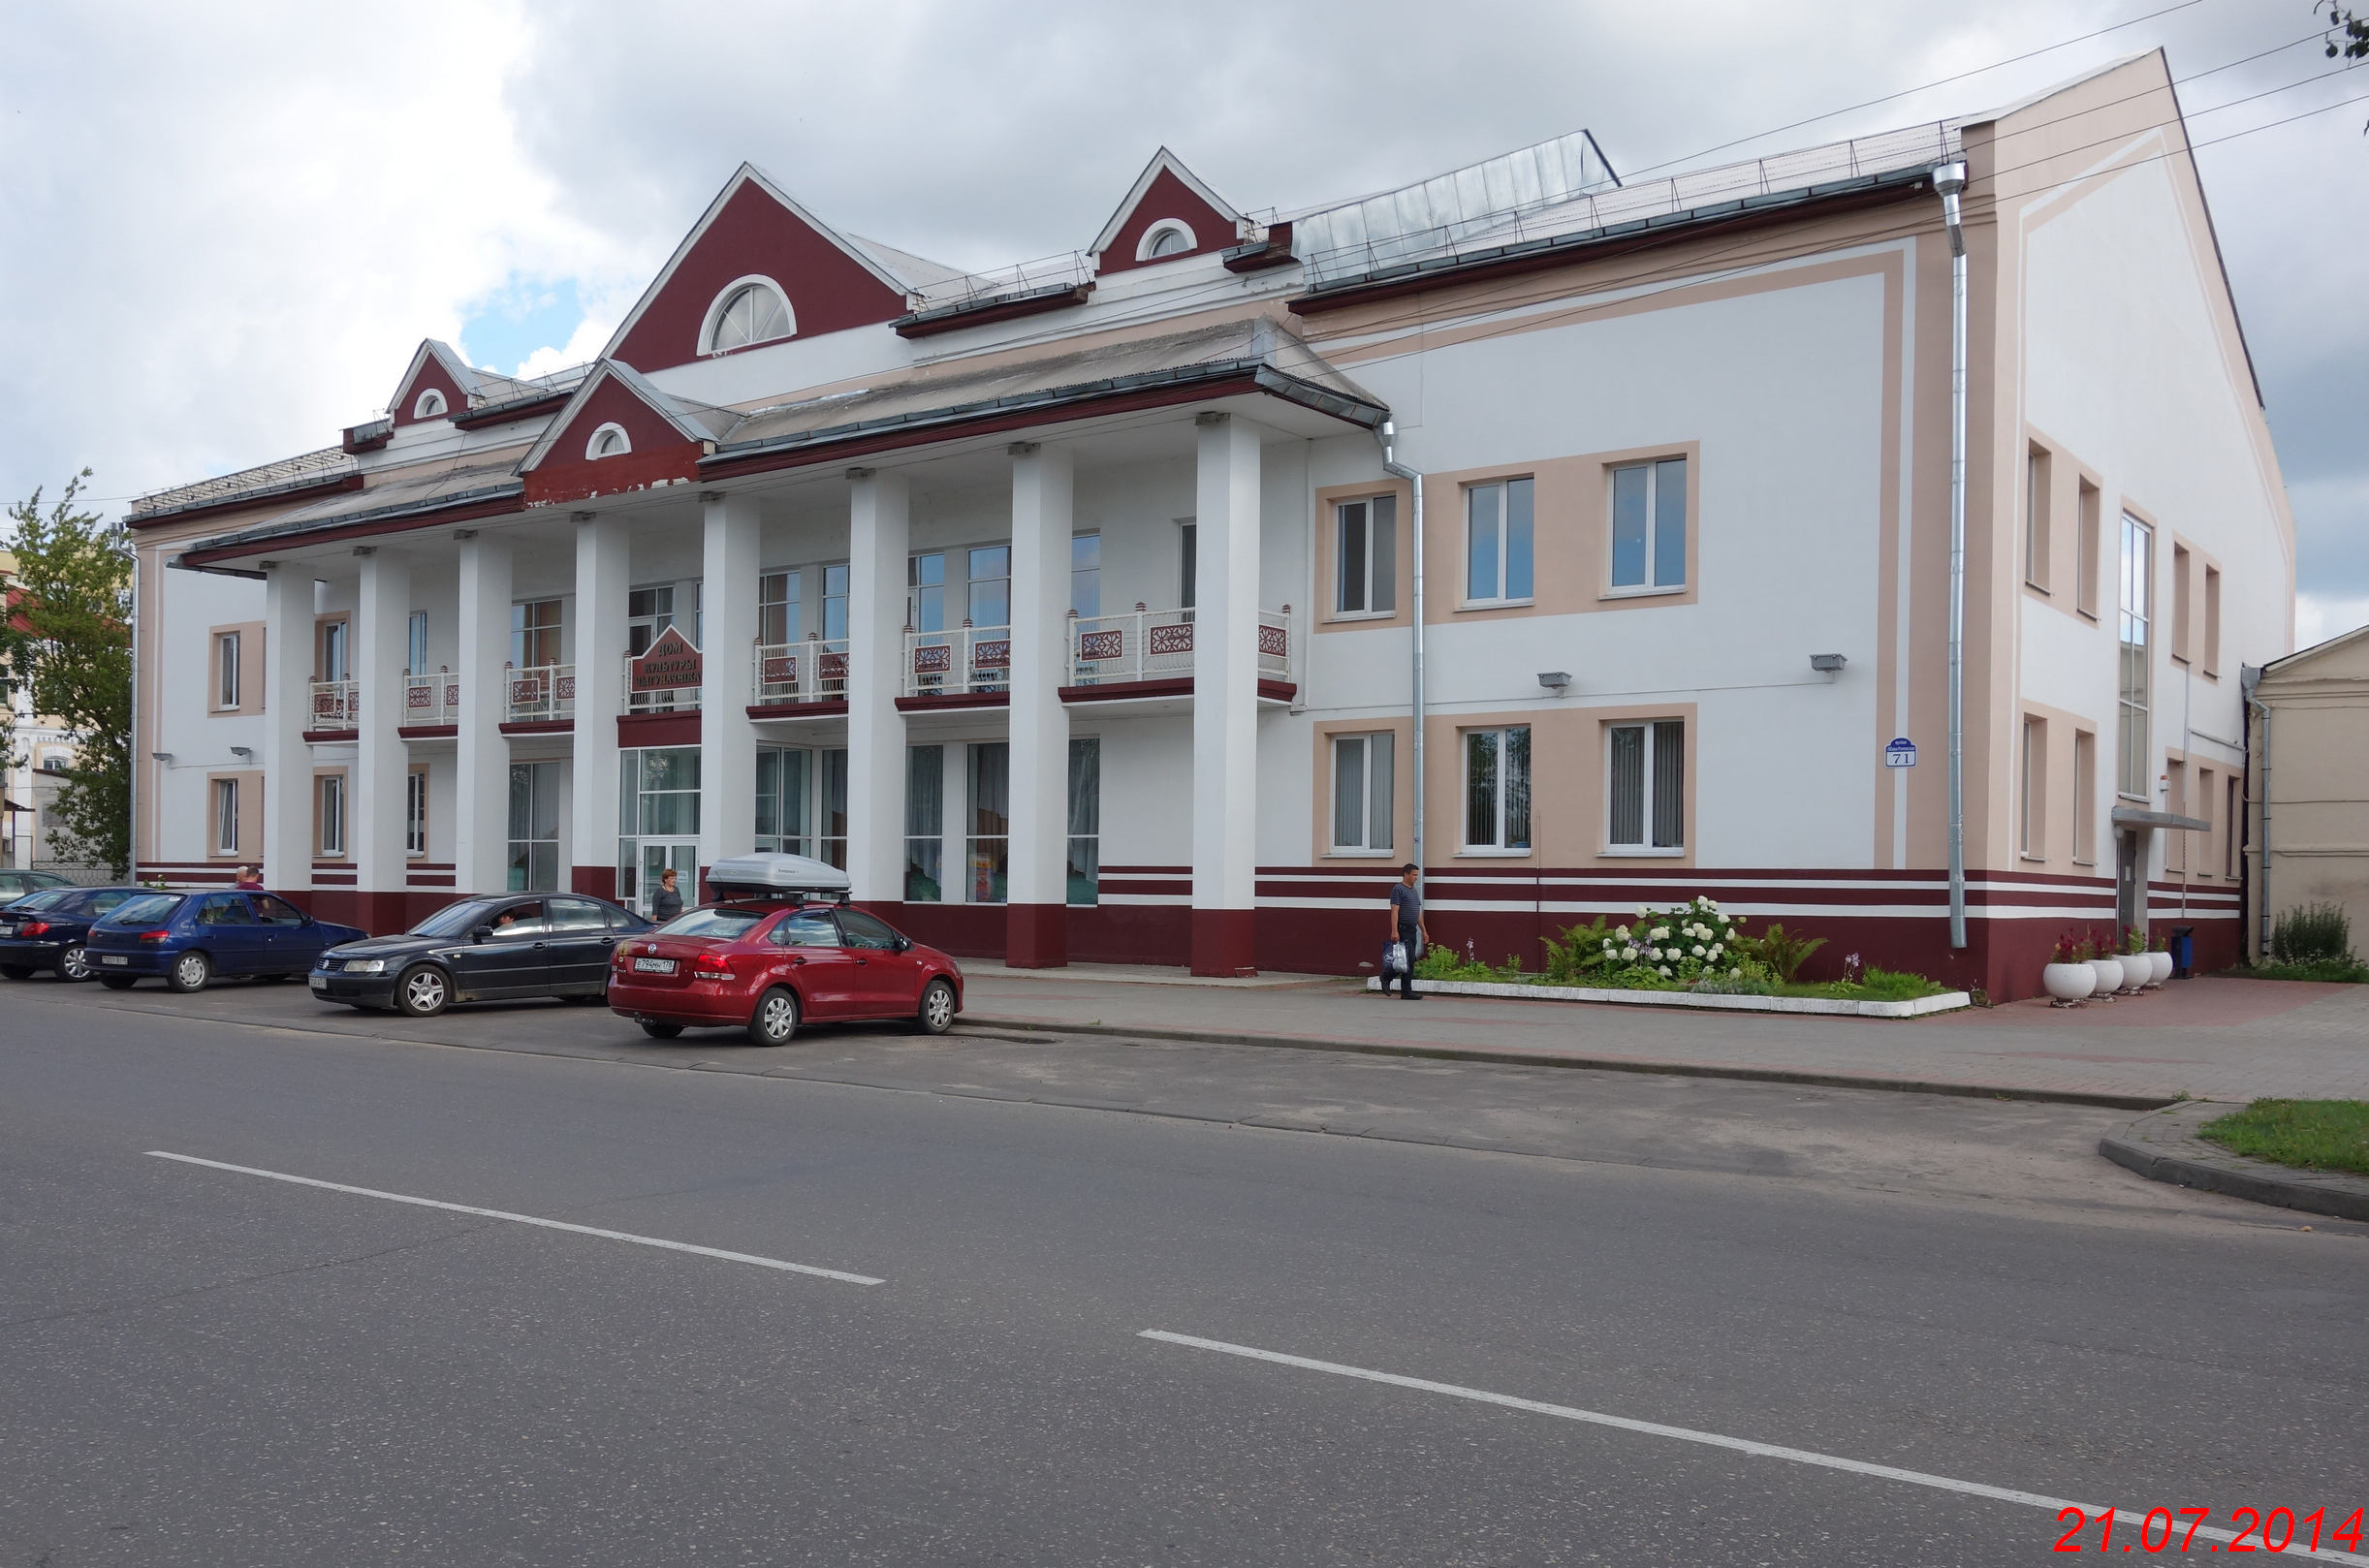 Дом культуры Белоруссия